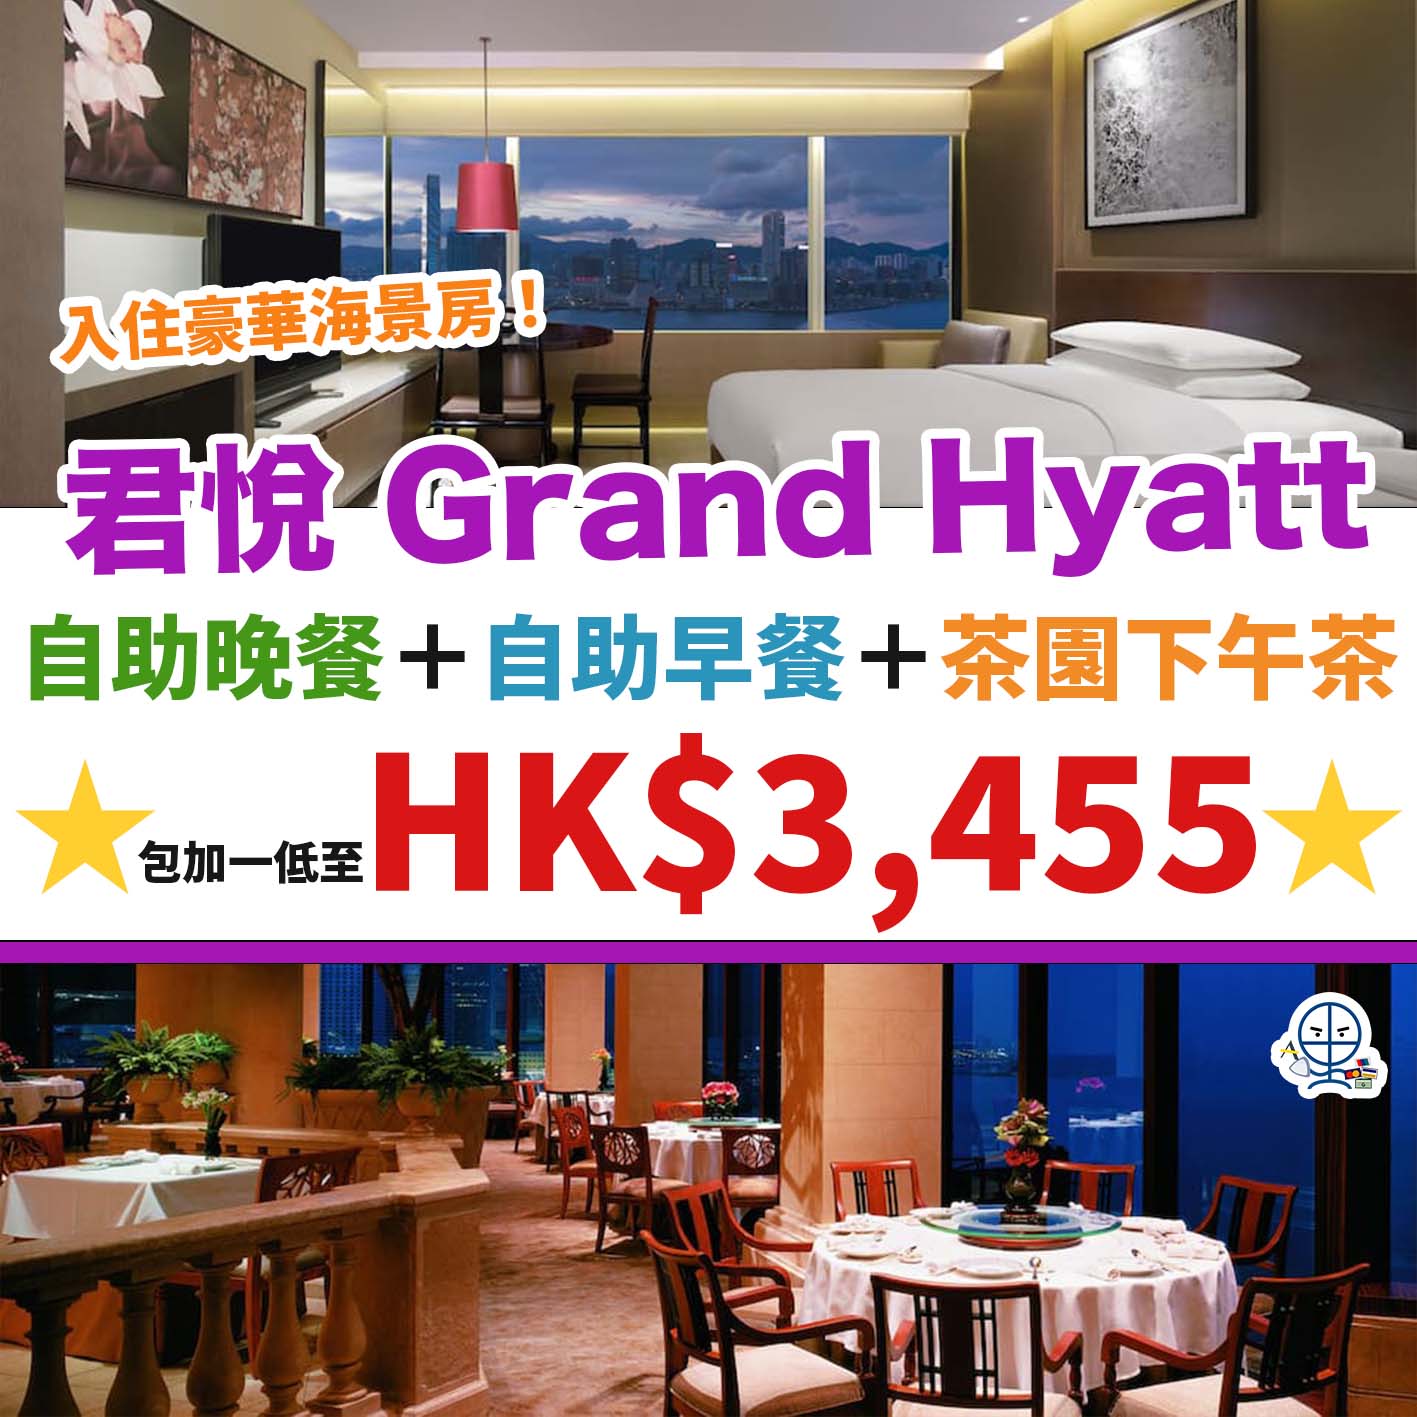 香港君悅酒店-Grand Hyatt Hotel-Staycation優惠-高CP套票-香港酒店Staycation-0812－1